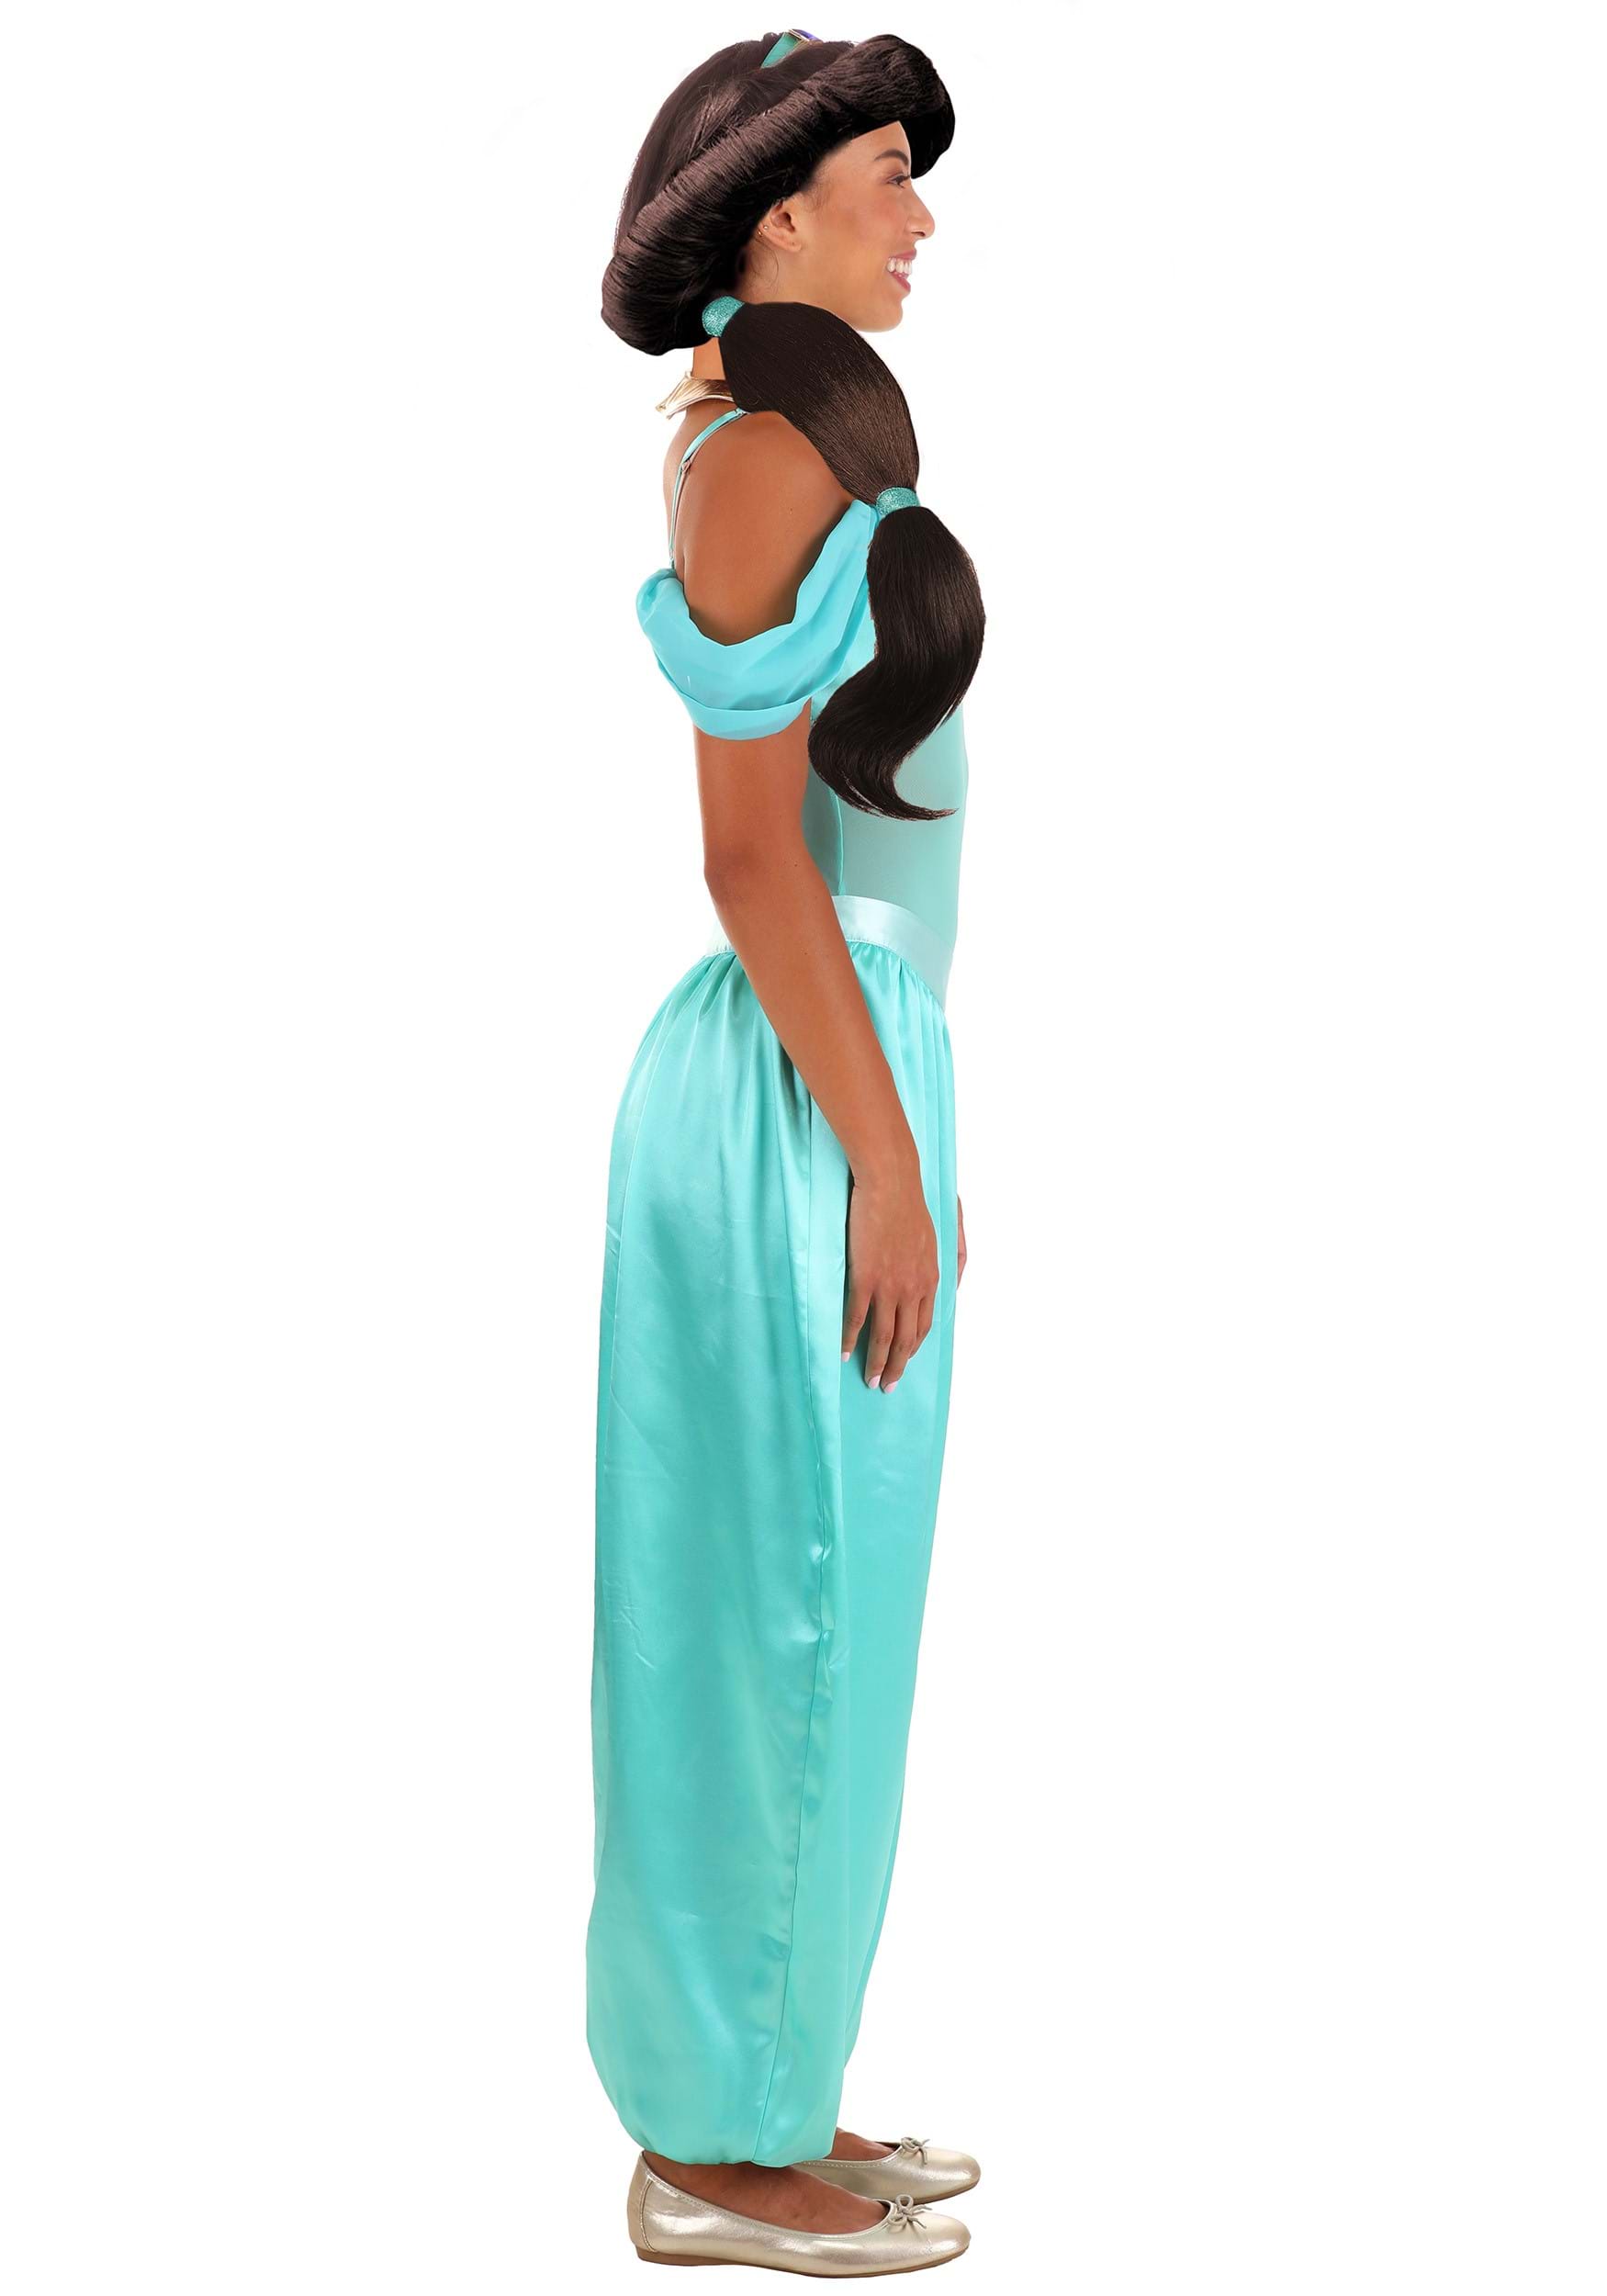 https://images.fun.com/products/83430/2-1-292710/aladdin-womens-jasmine-costume-alt-6.jpg